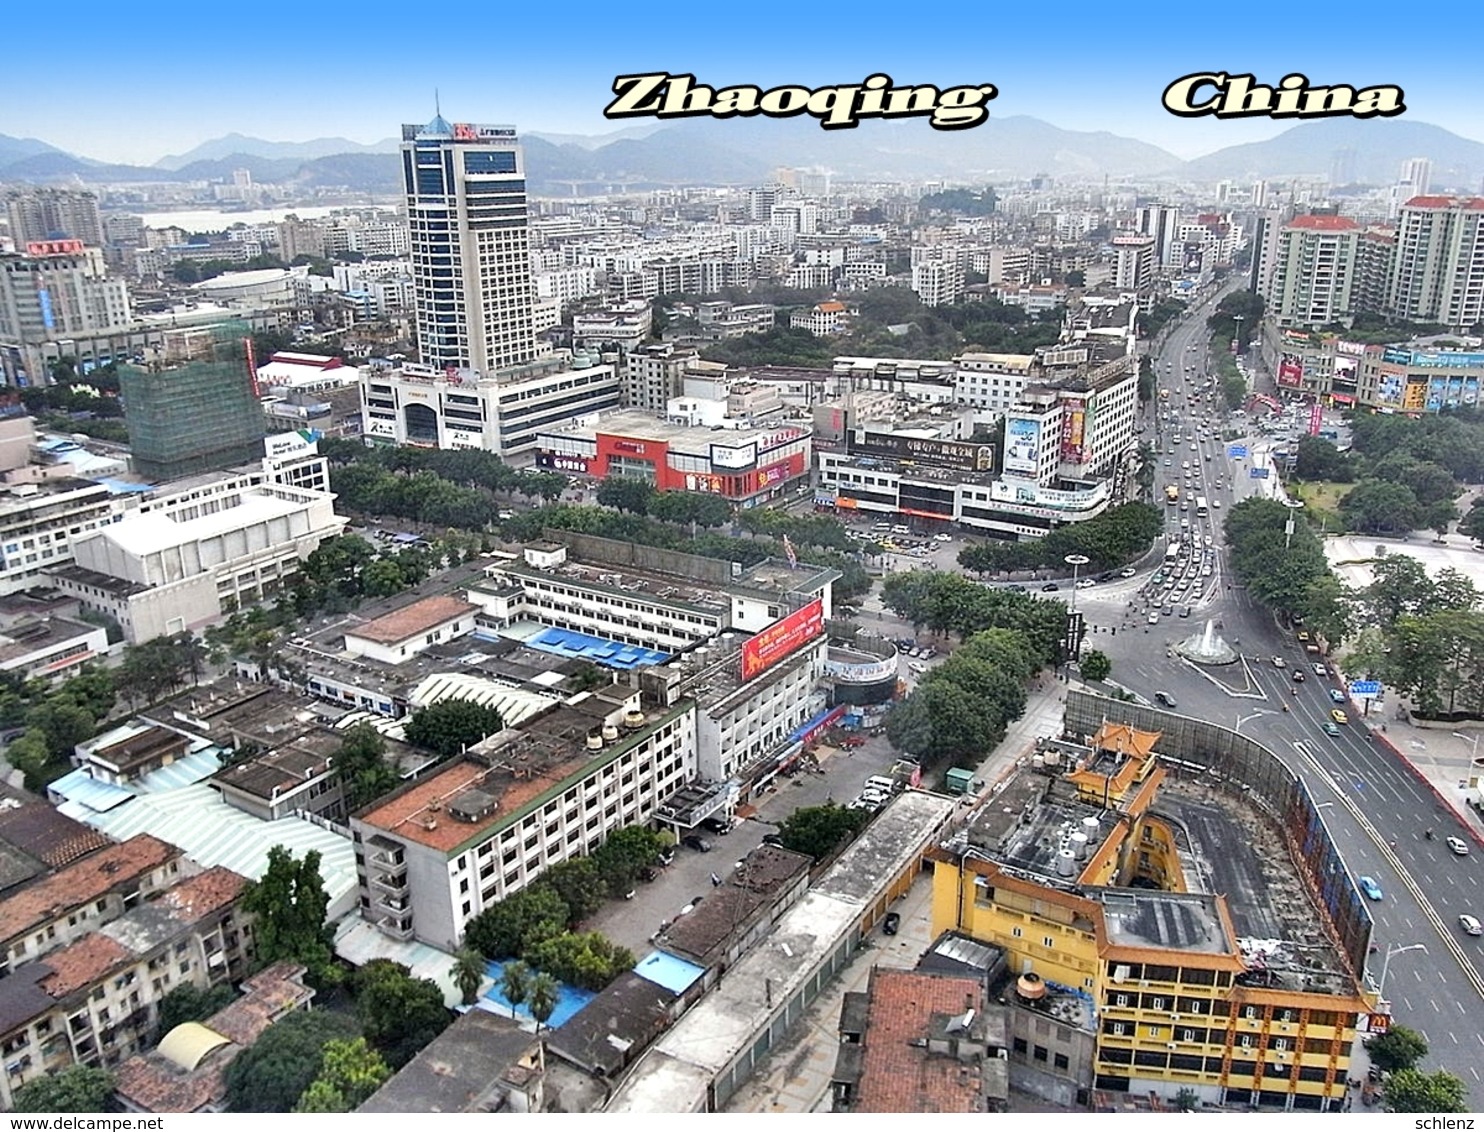 Zhaoqing China - China